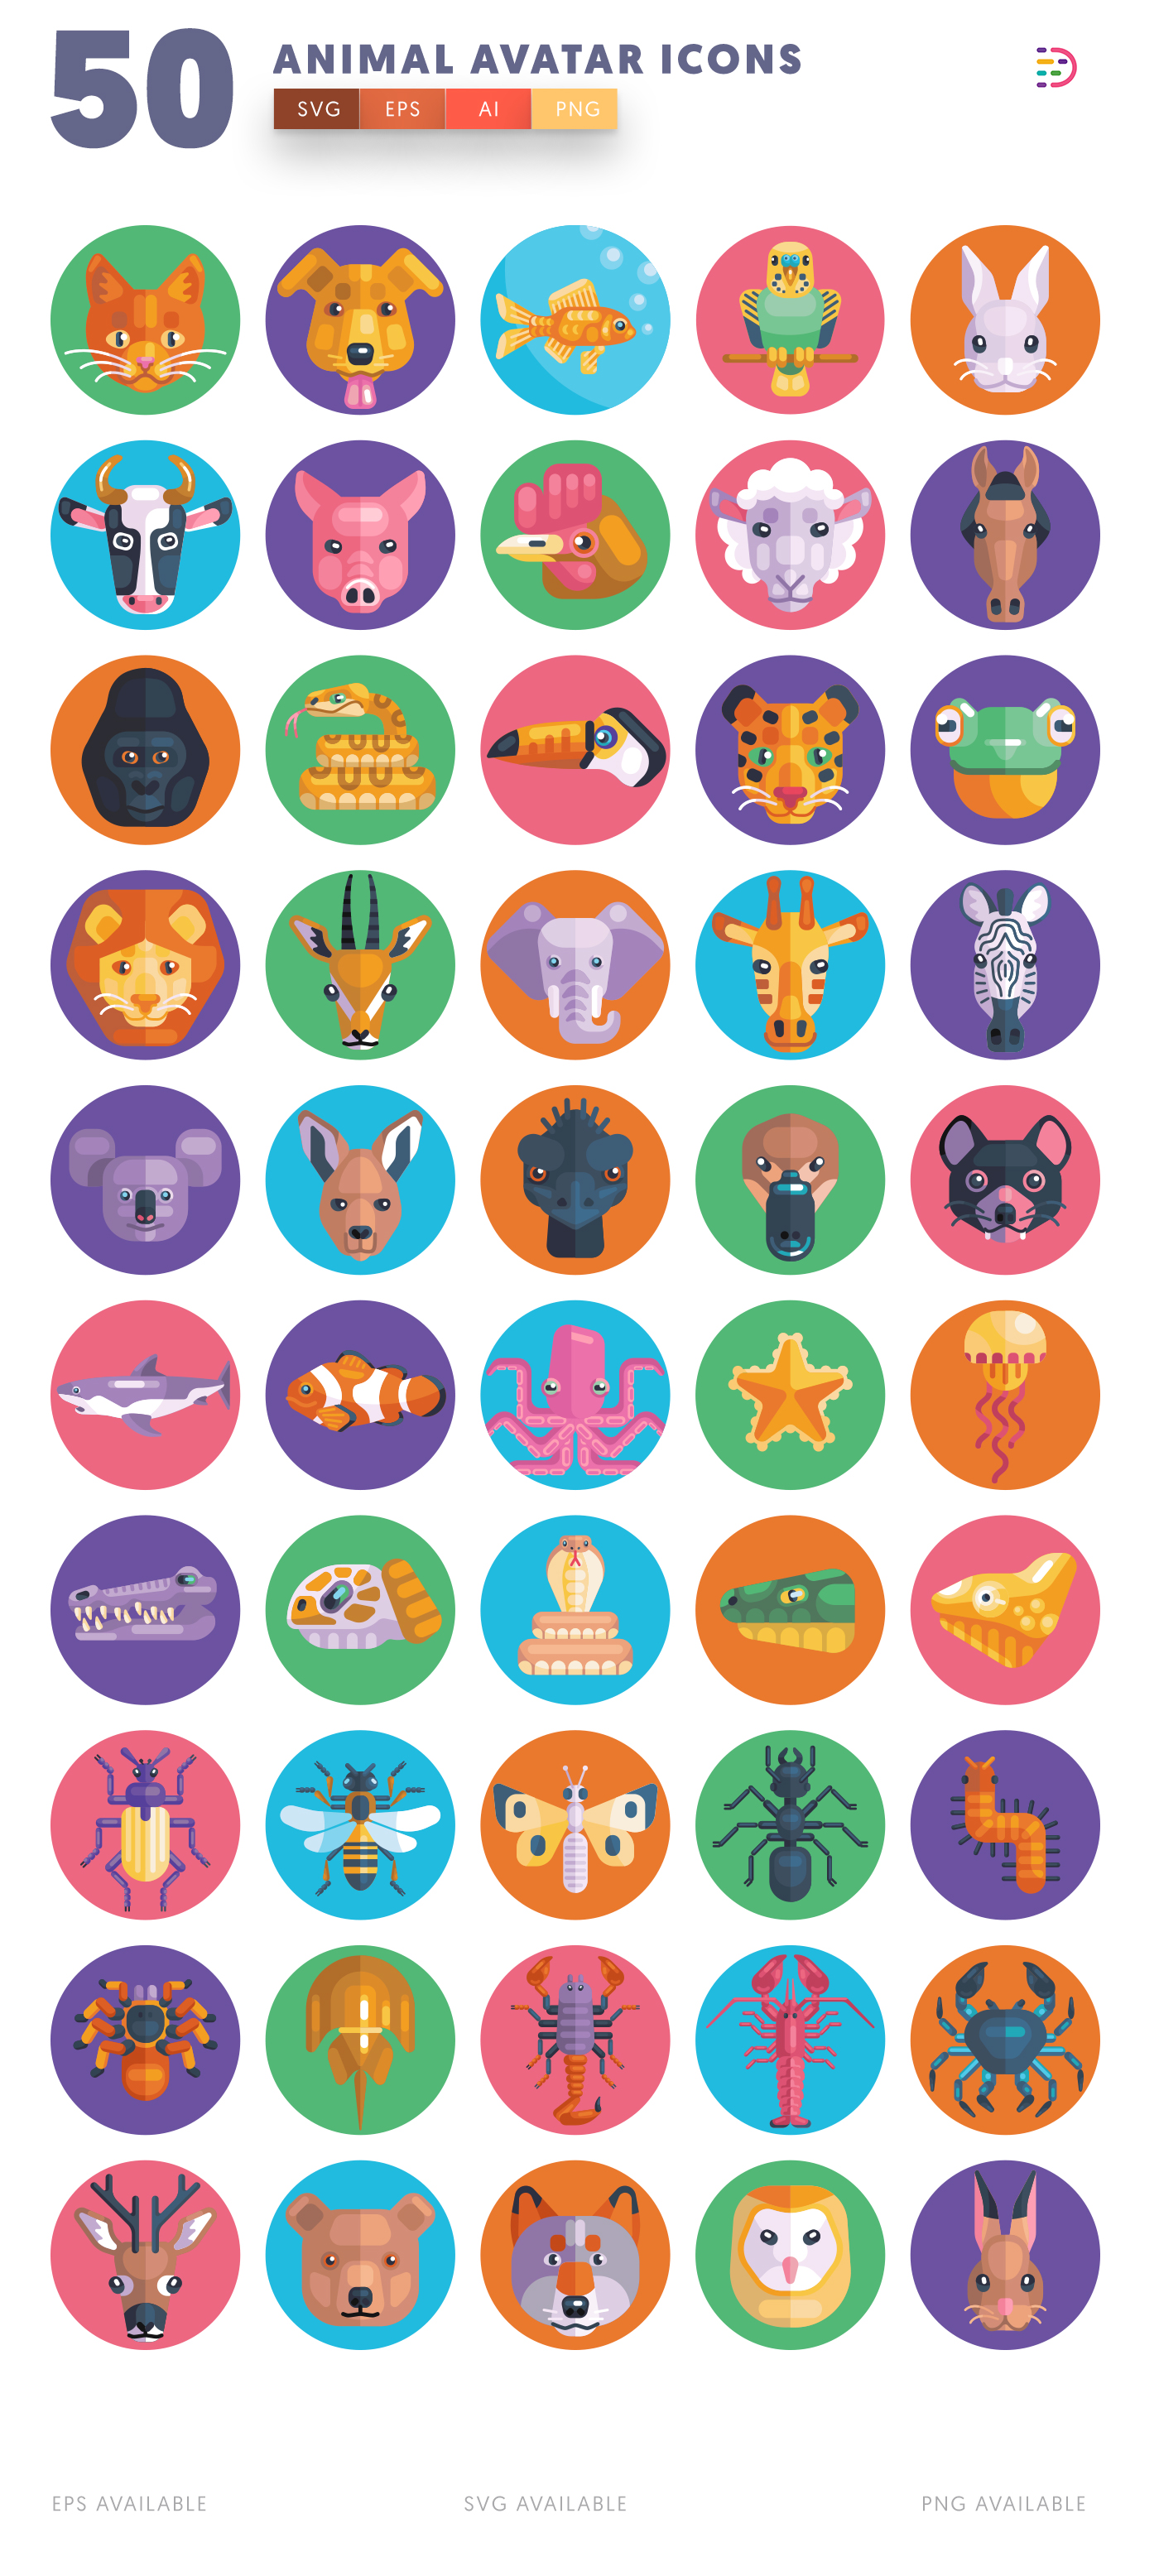 Animal Avatar Icons list